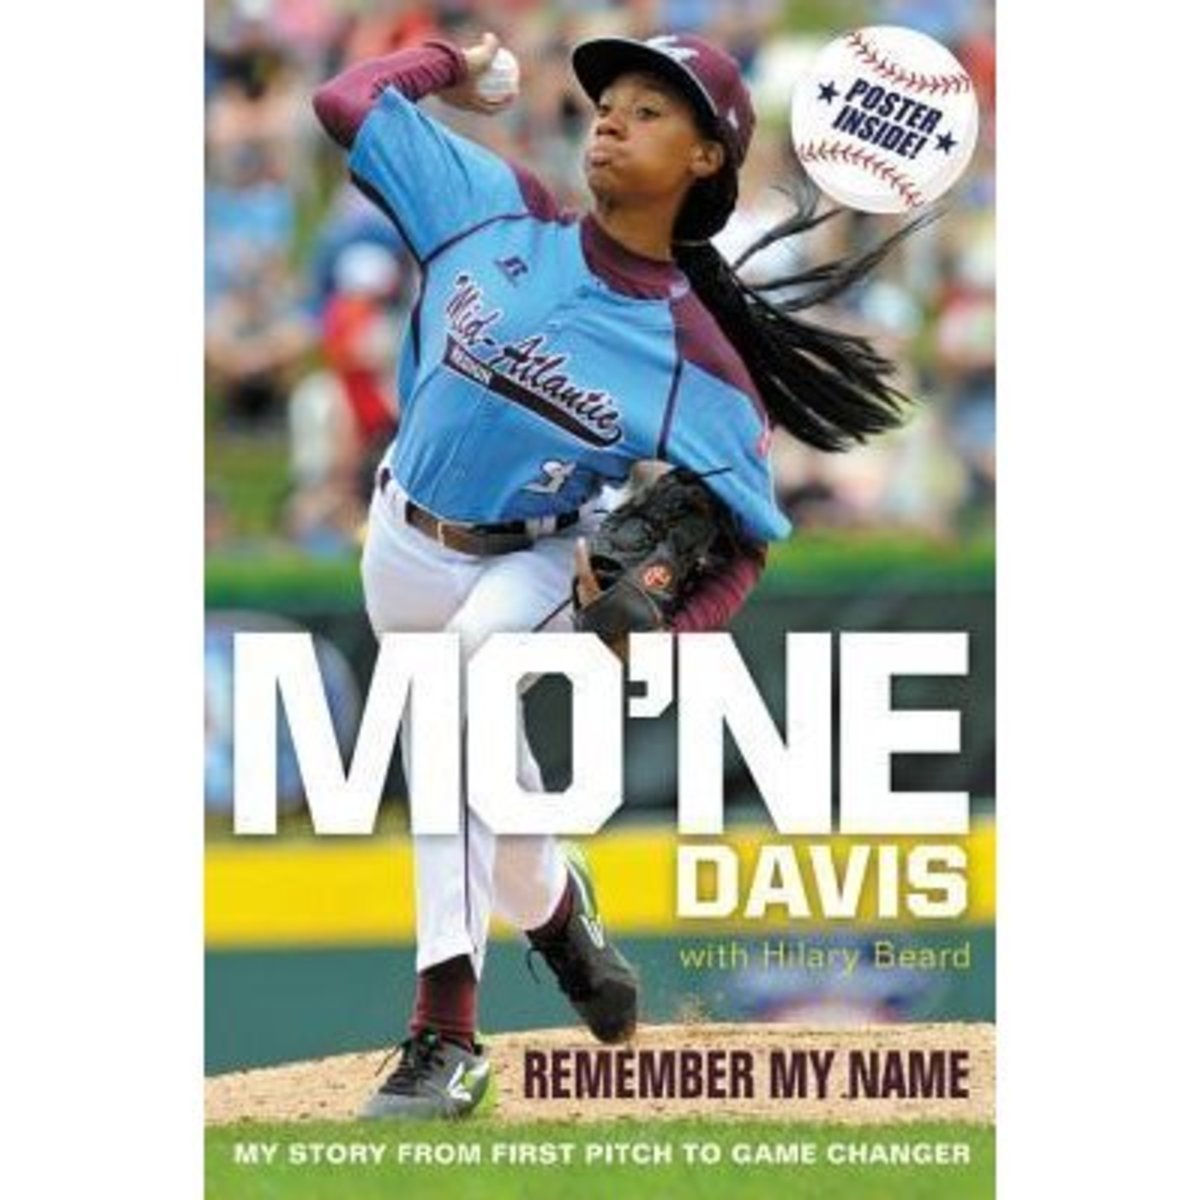 Mo'ne Davis, Age 13 (Continued) – The Kids Hall of Fame Spotlights